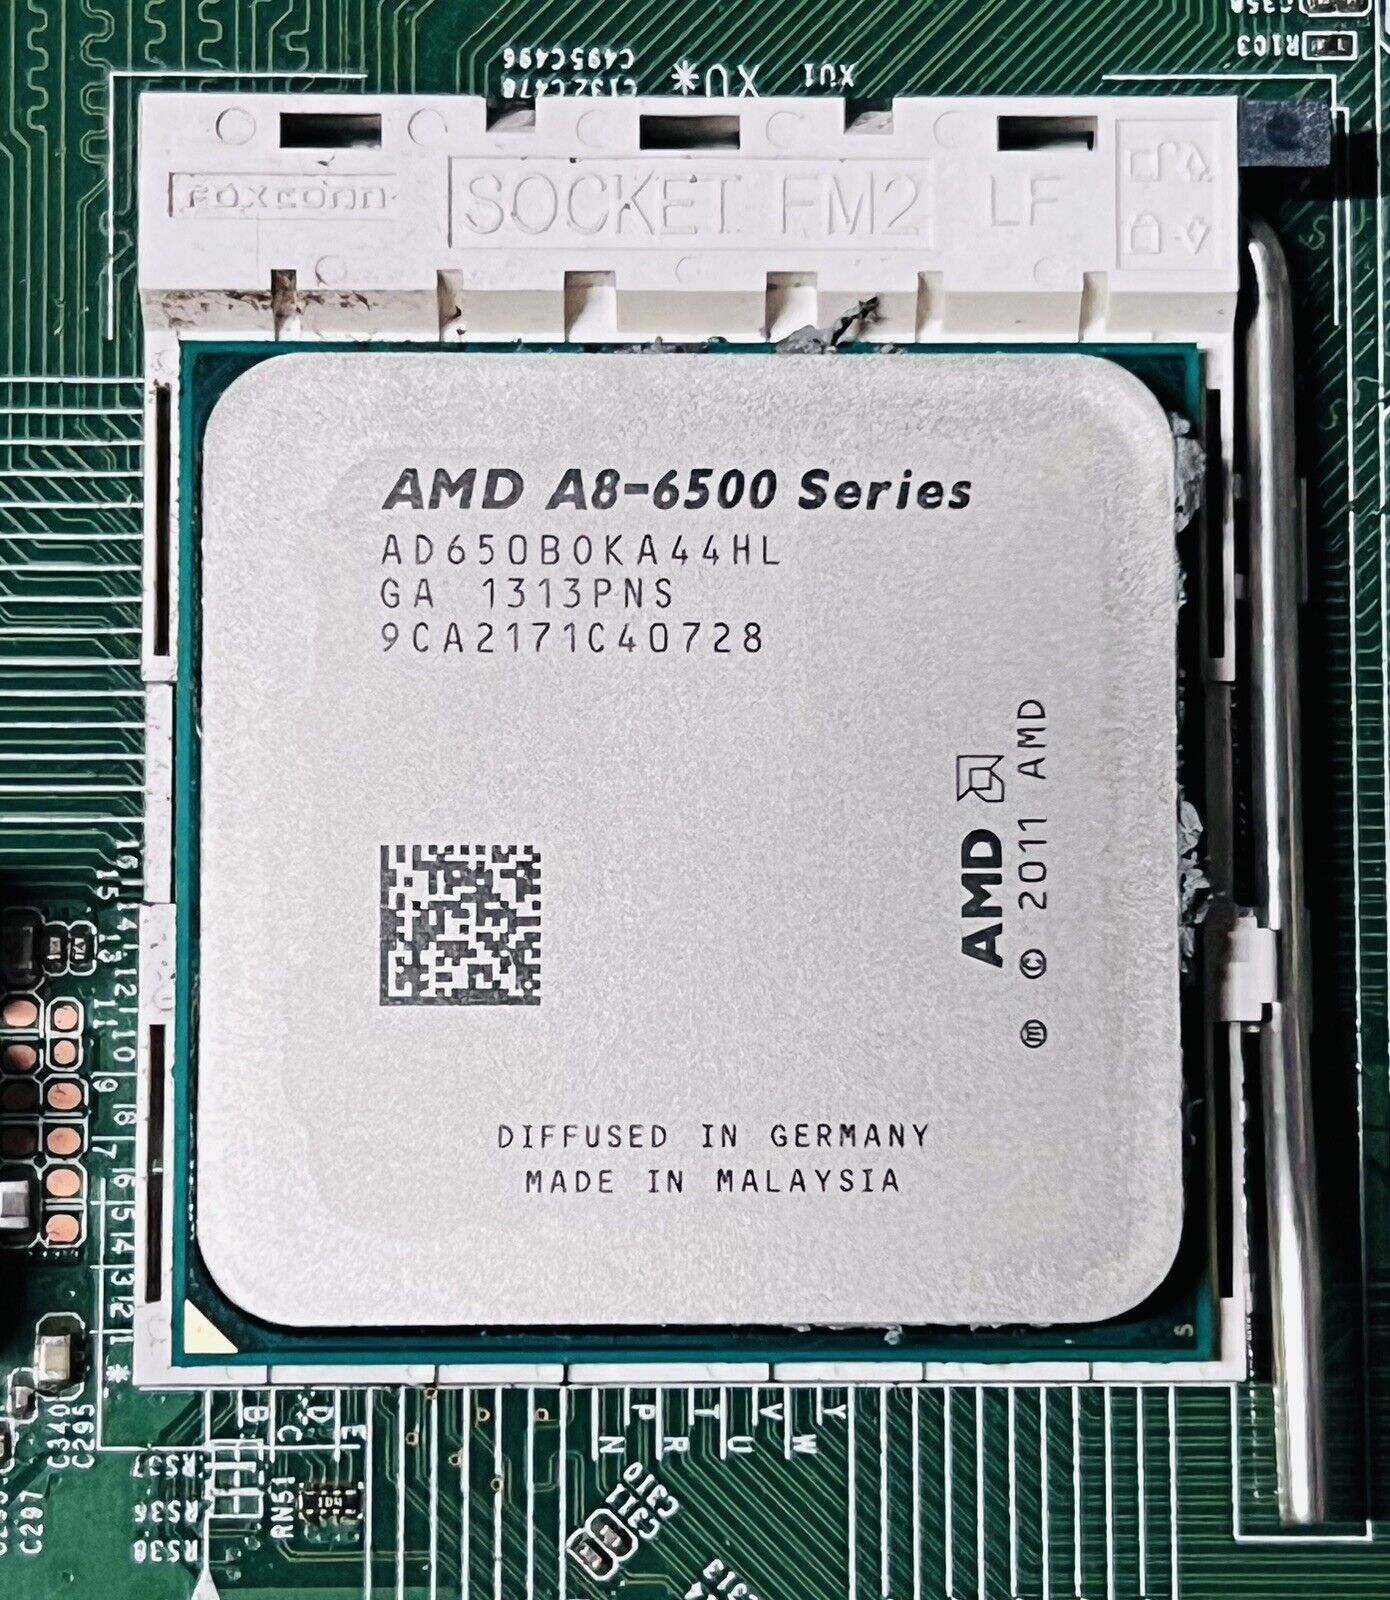 AMD 3.5 GHZ MODEL A8-6500B QUAD CORE Processor, AD650BOKA44HL, FM2 Socket